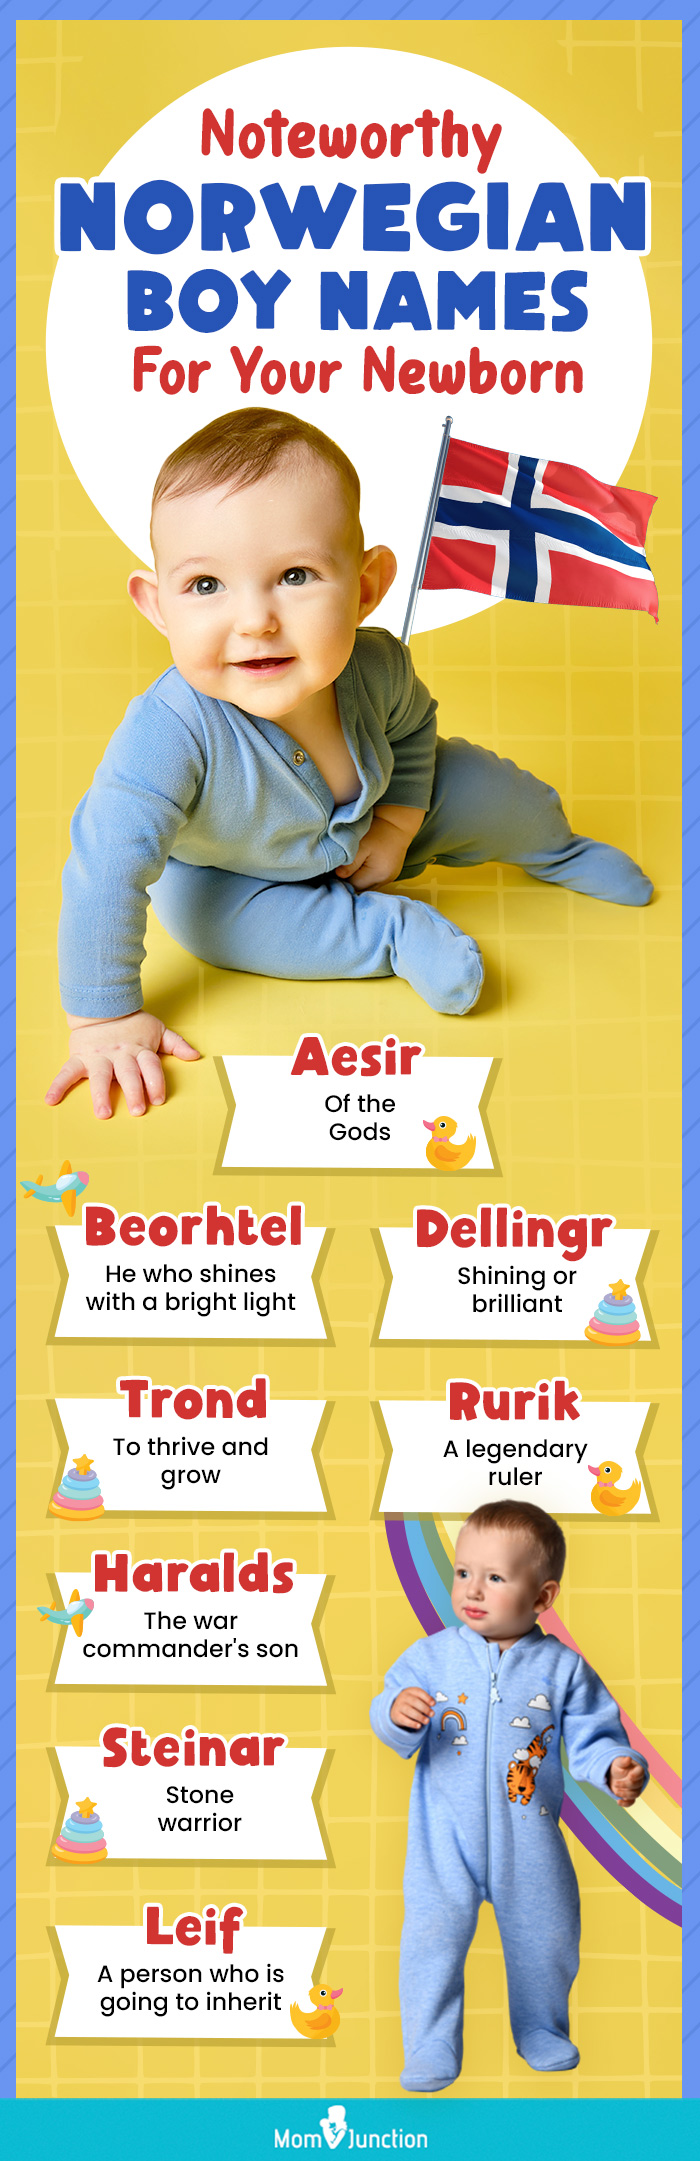 noteworthy norwegian boy names for your newborn (infographic)